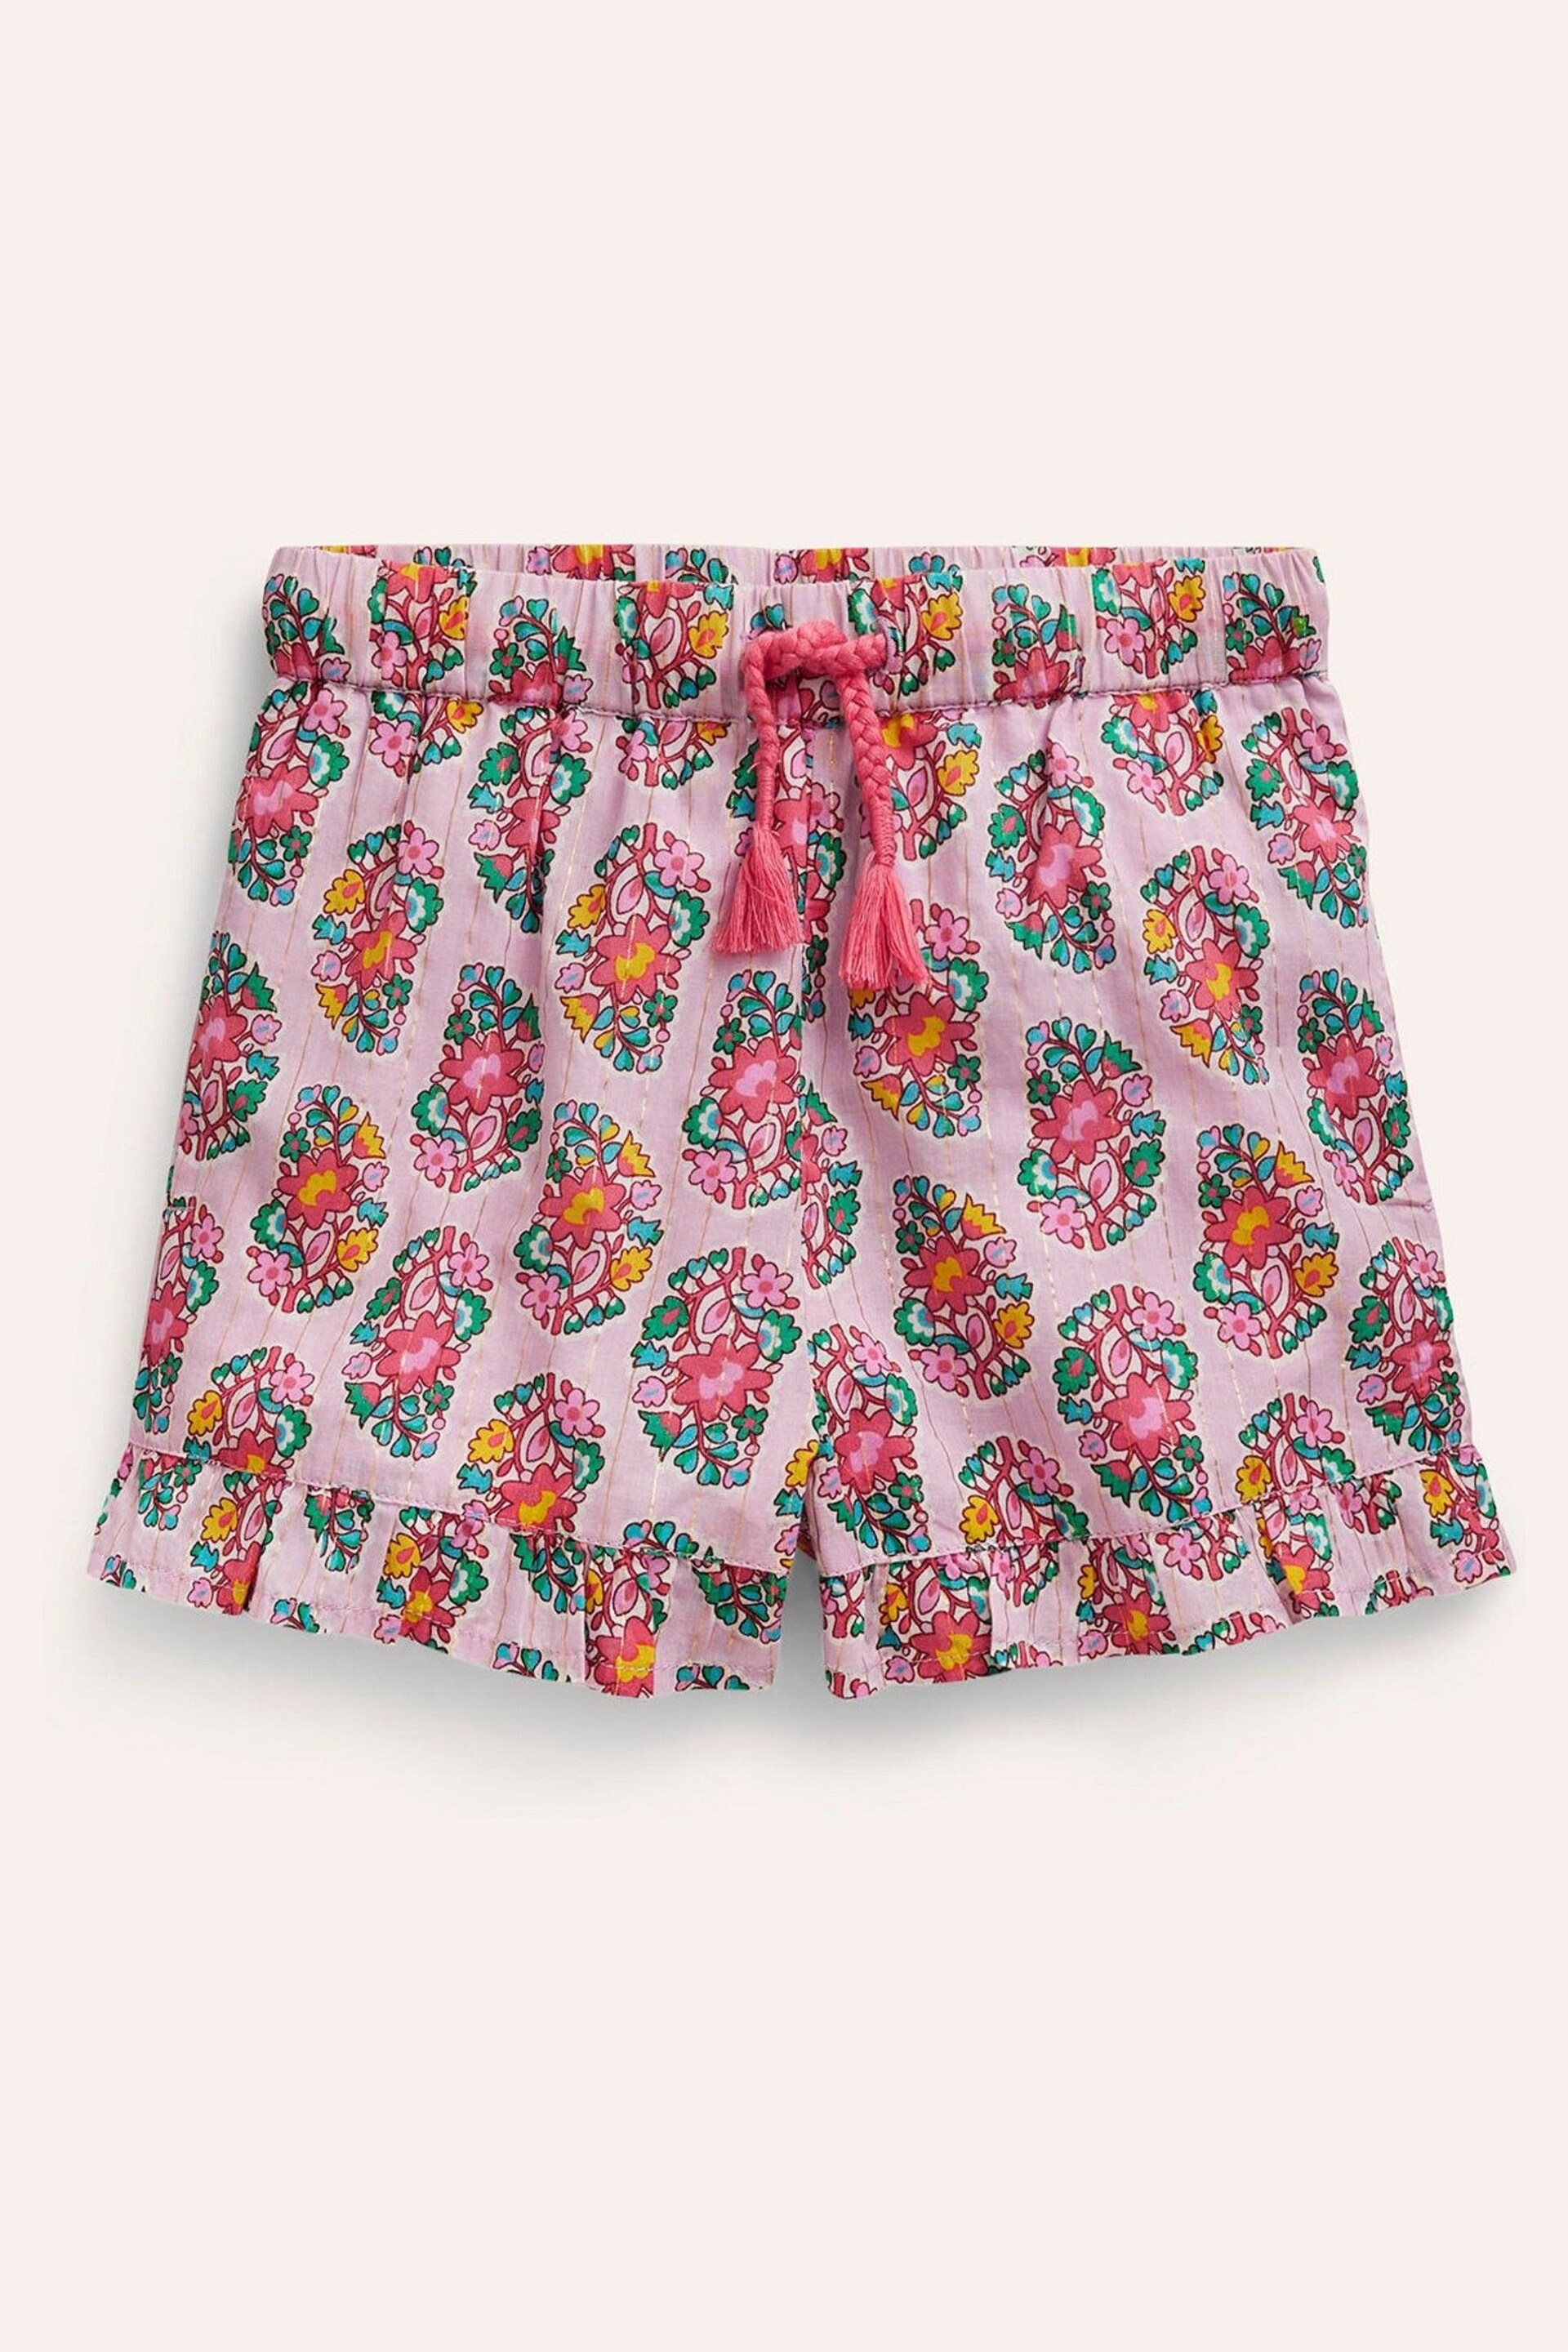 Boden Pink Frill Hem Woven Shorts - Image 1 of 3